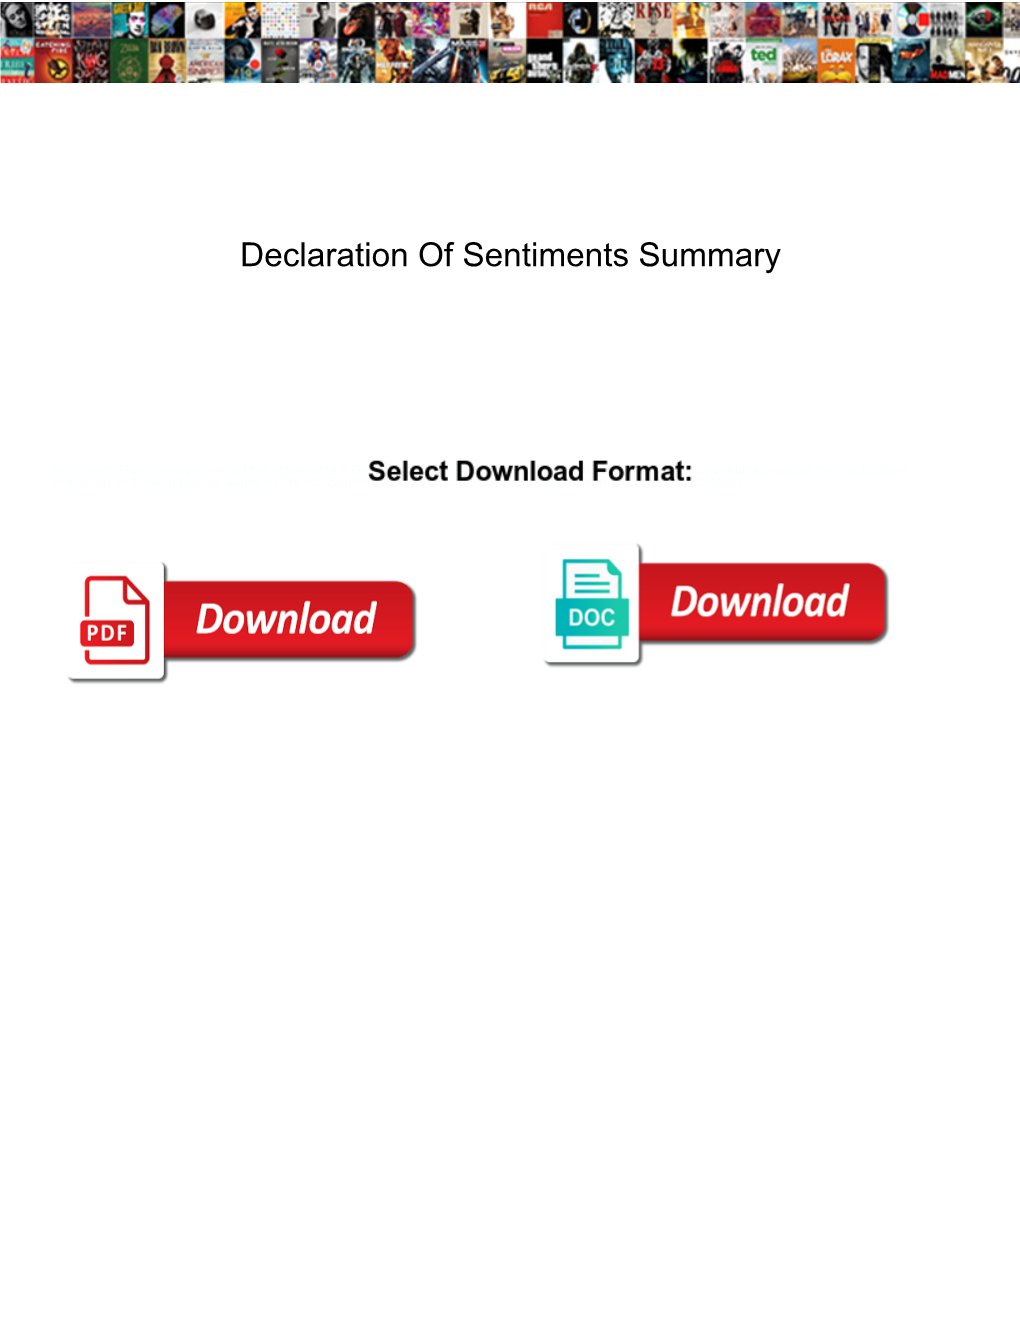 Declaration of Sentiments Summary